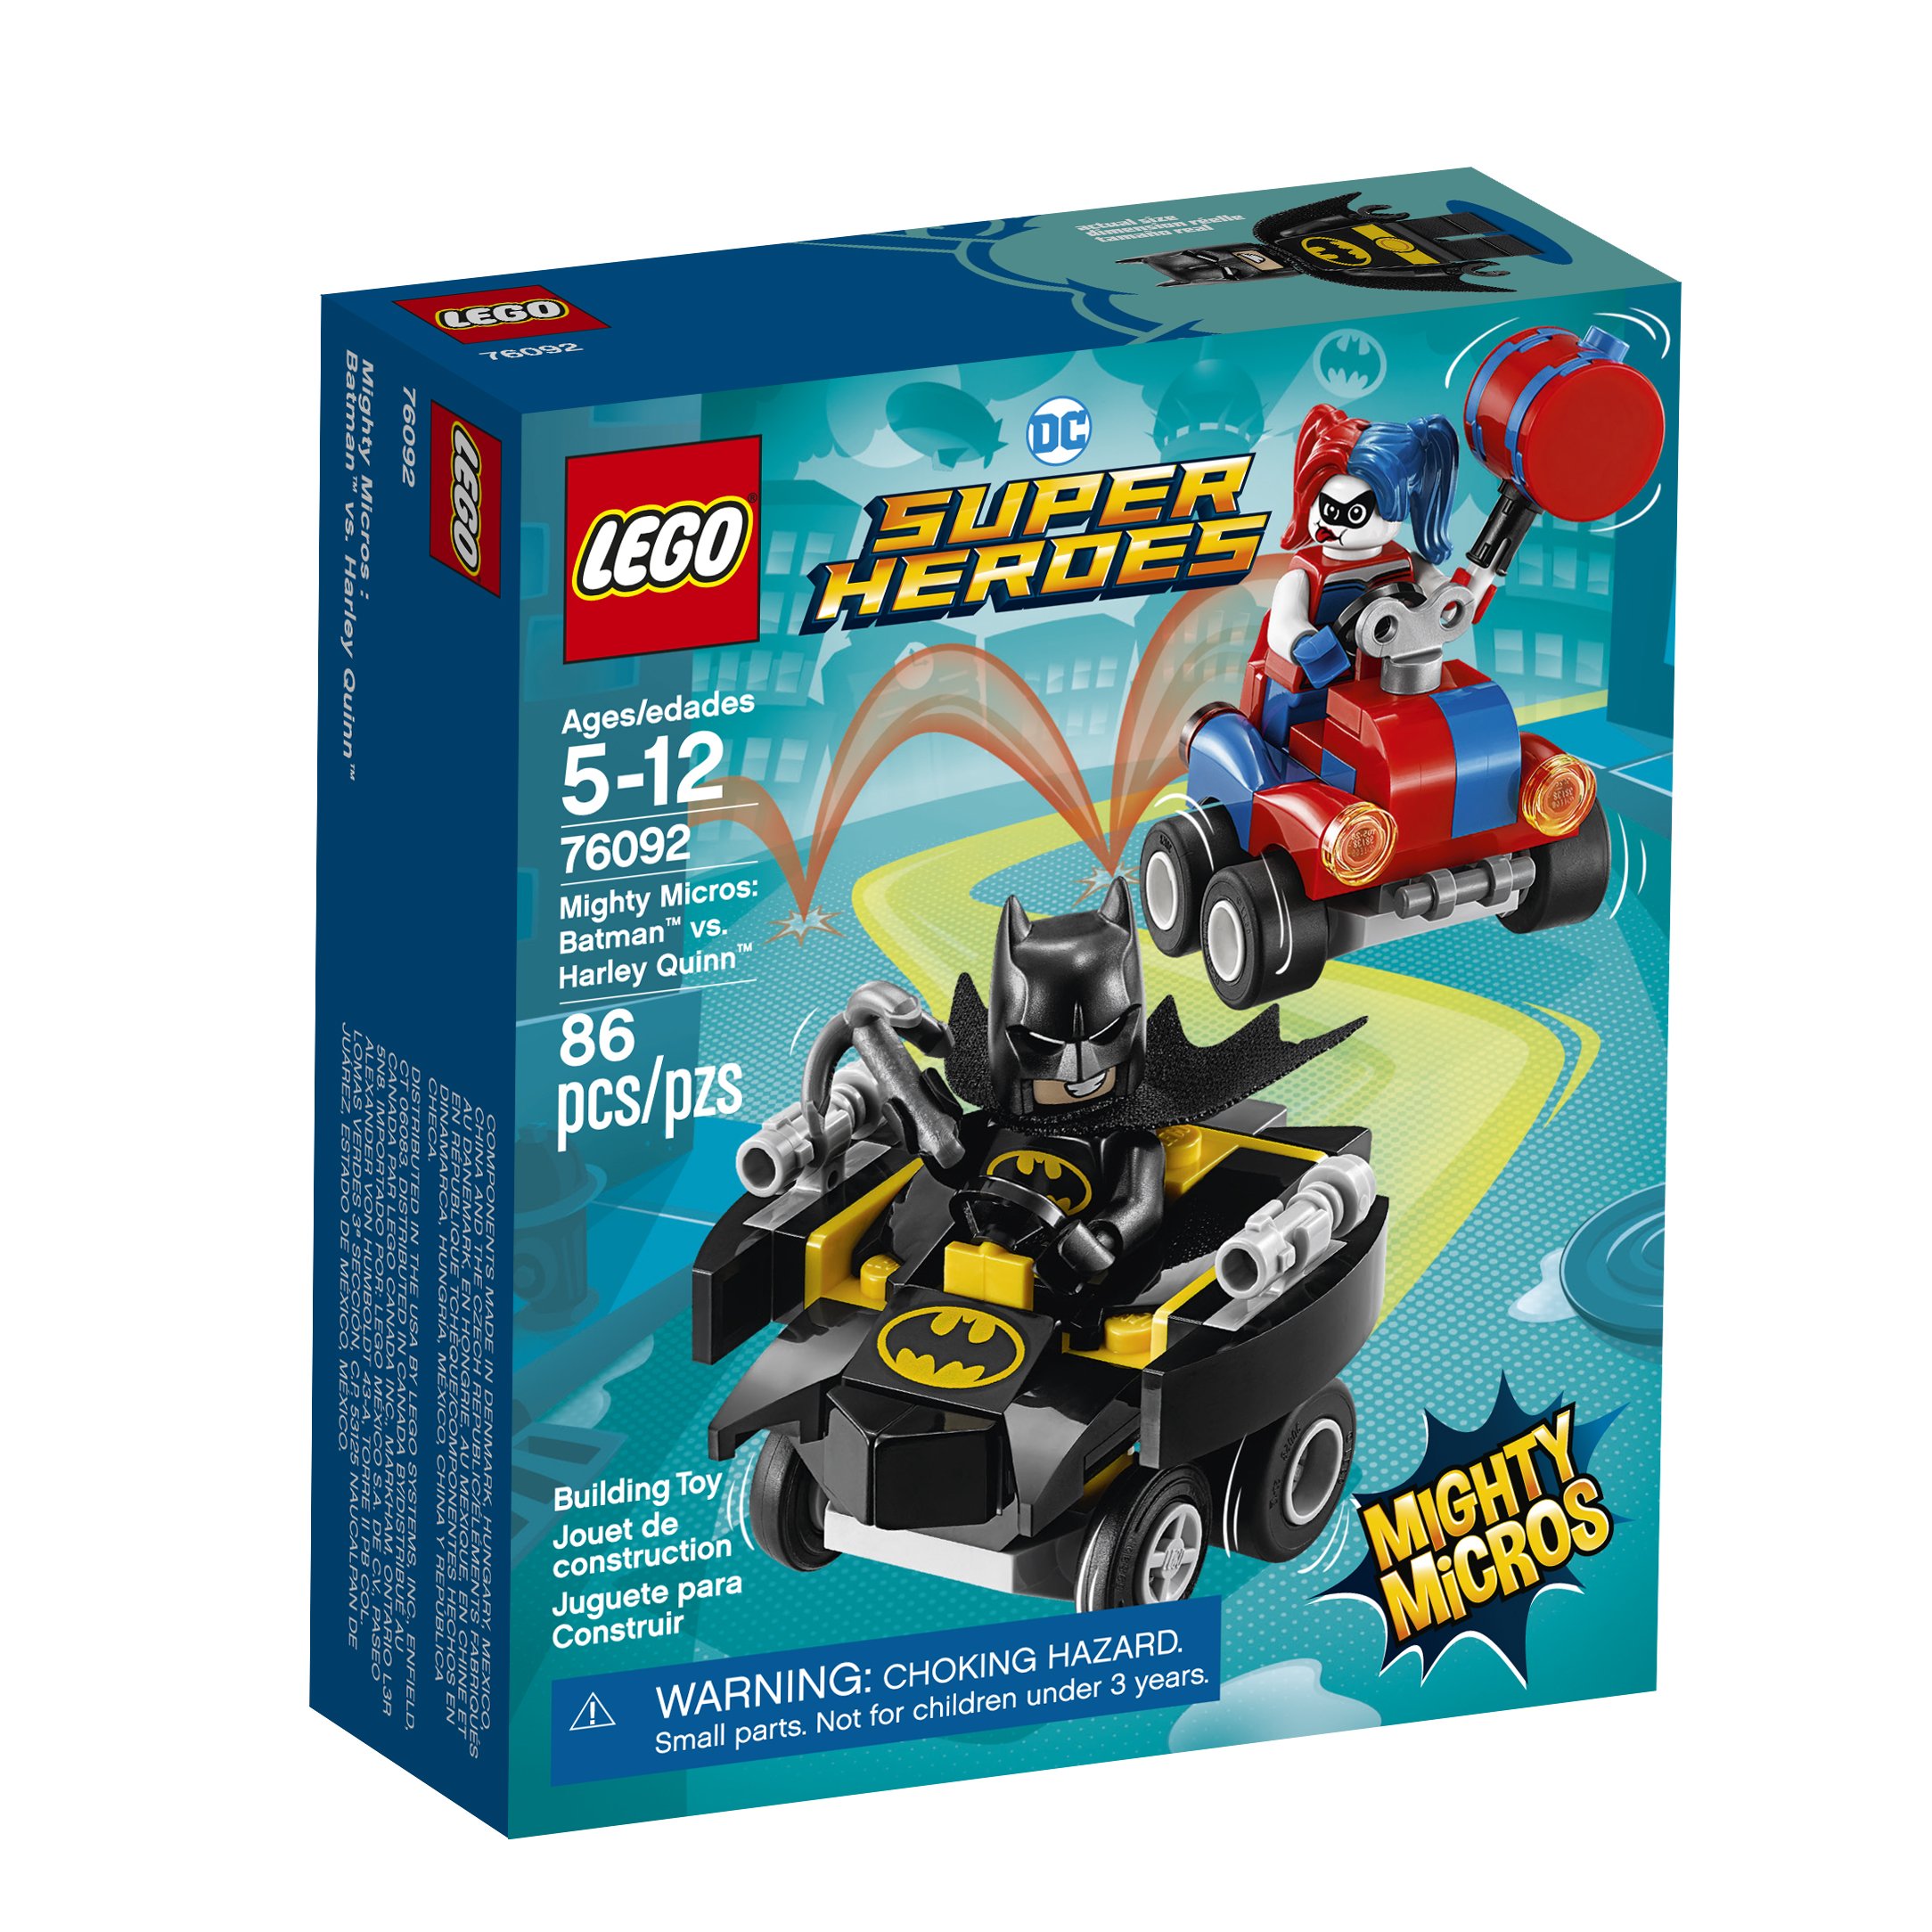 Mighty Micros Batman Vs Harley Quinn Lego